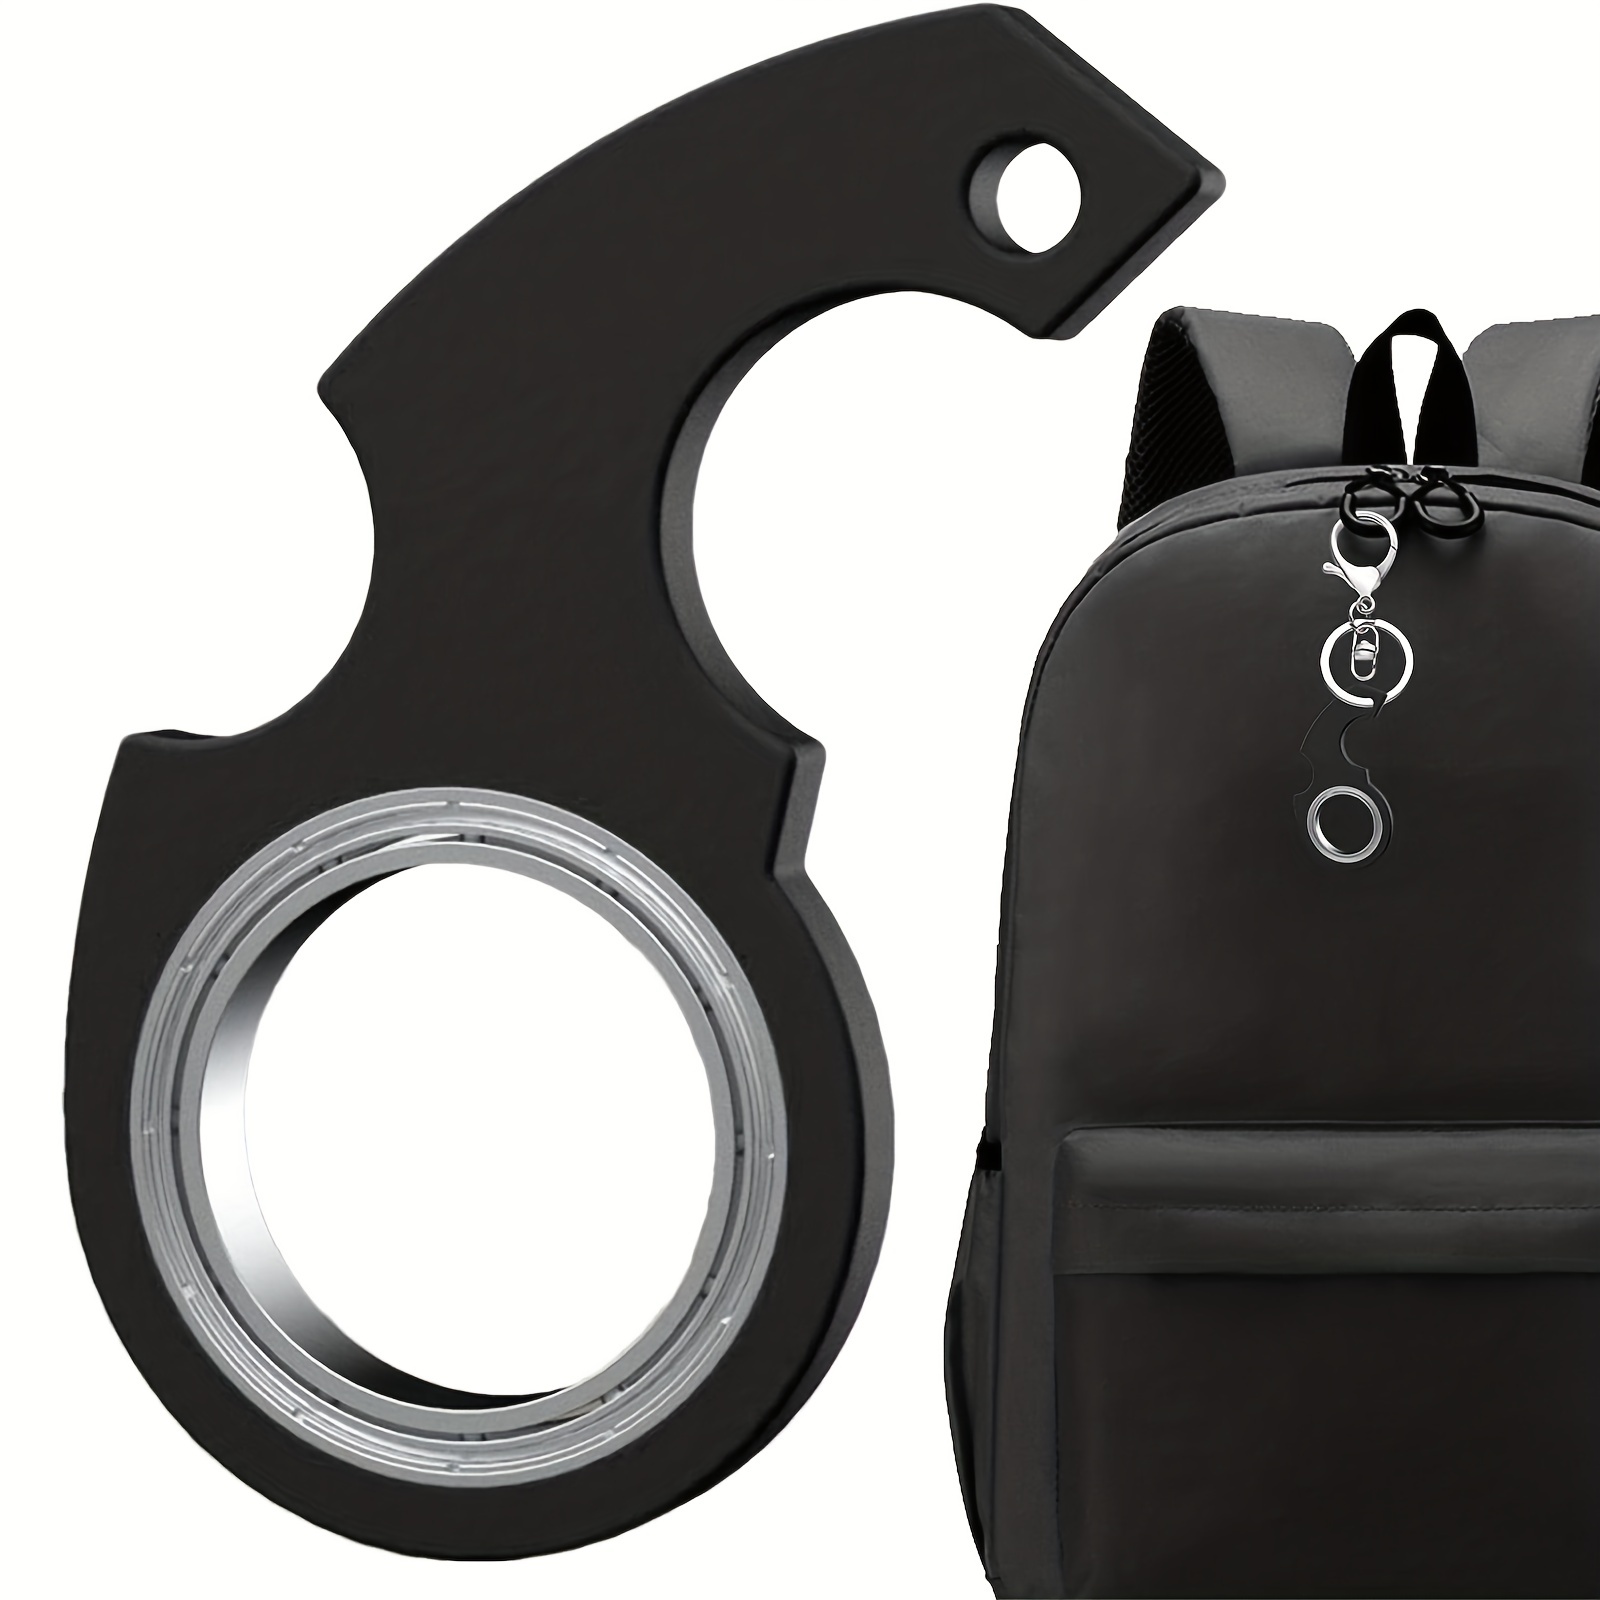 Porte-clés Fidget Spinner,Portable Keychain Spinning,Jouet